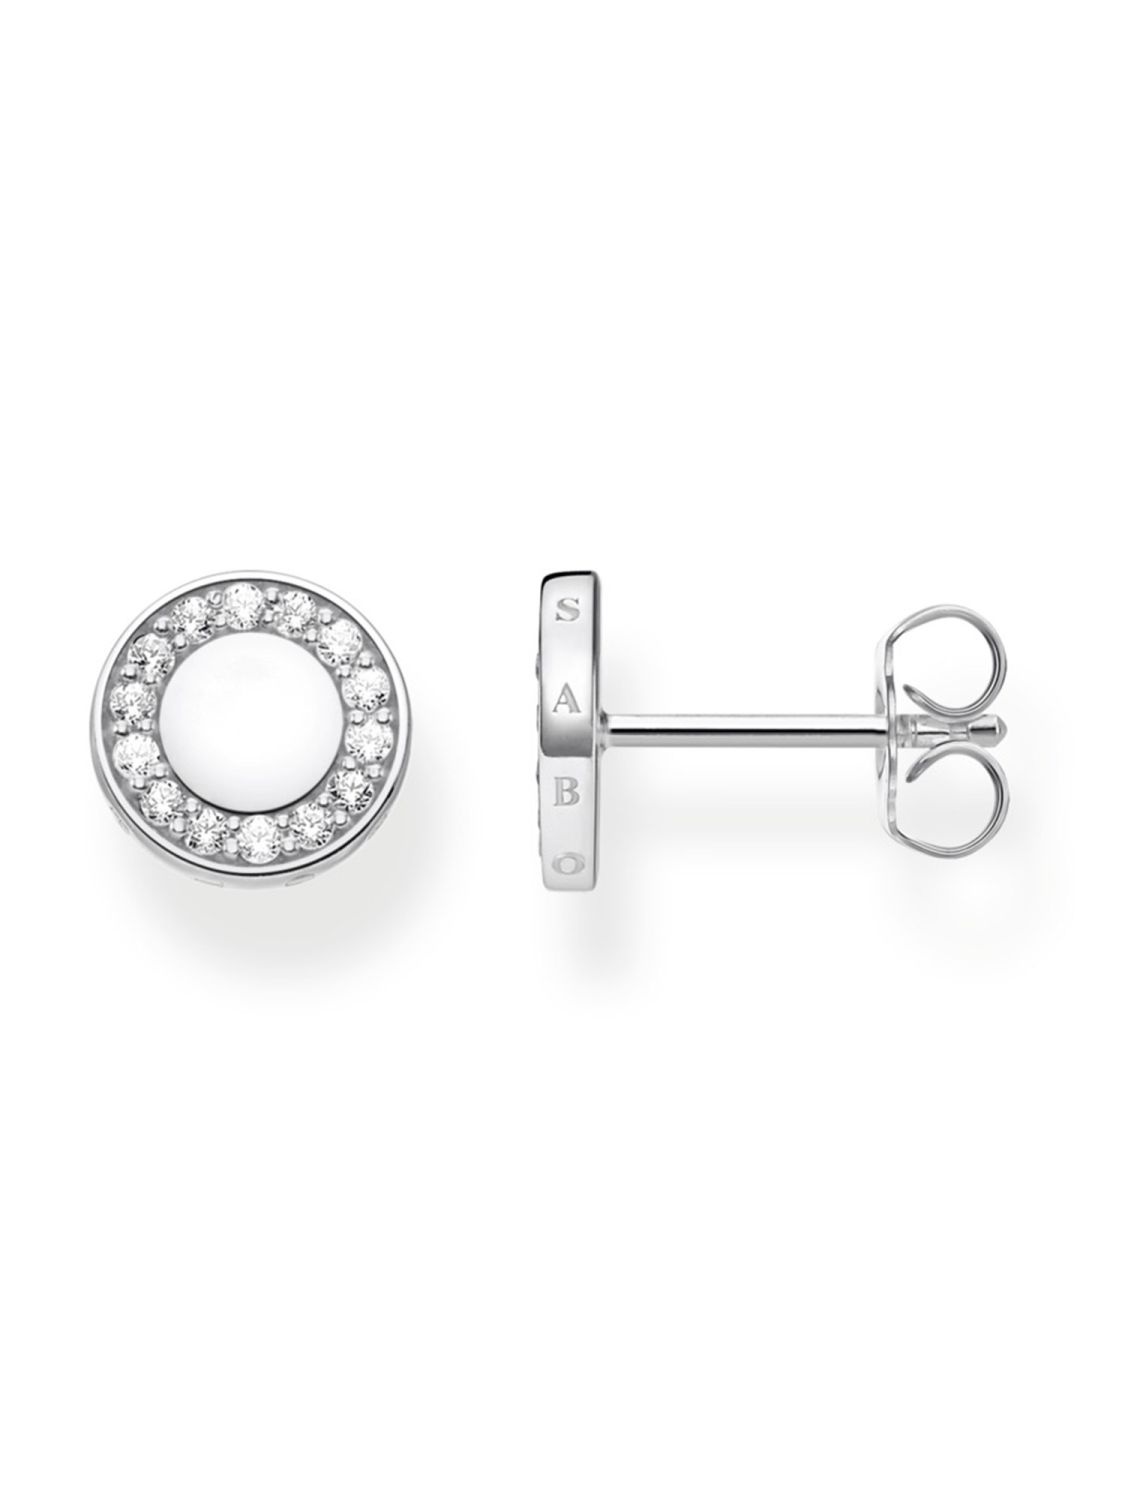 Thomas Sabo Ladies\' Silver Stud Earrings Circles H2061-051-14 • uhrcenter